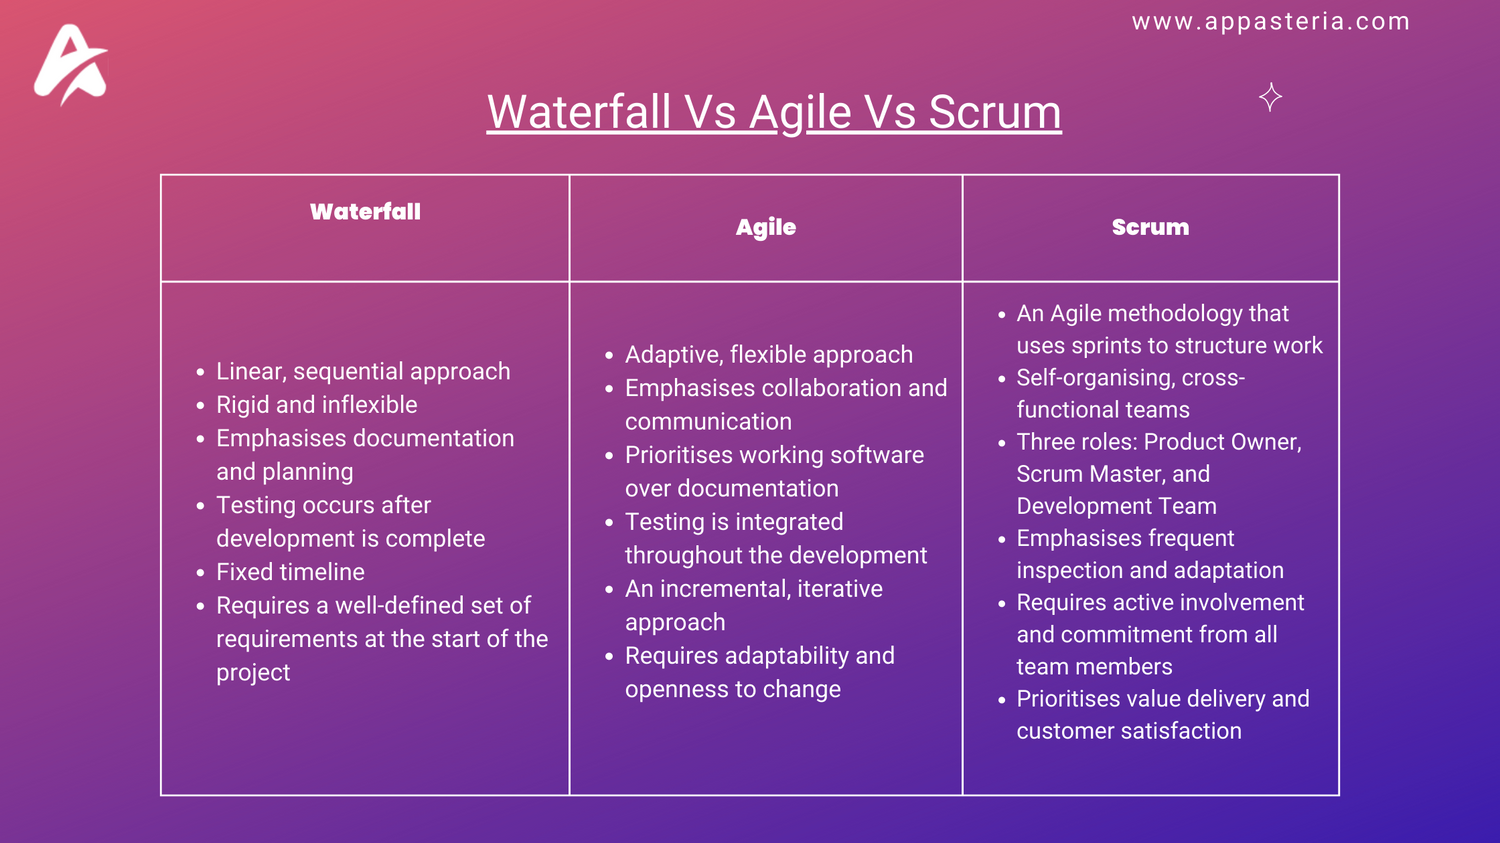 Waterfall vs Agile vs Scrum